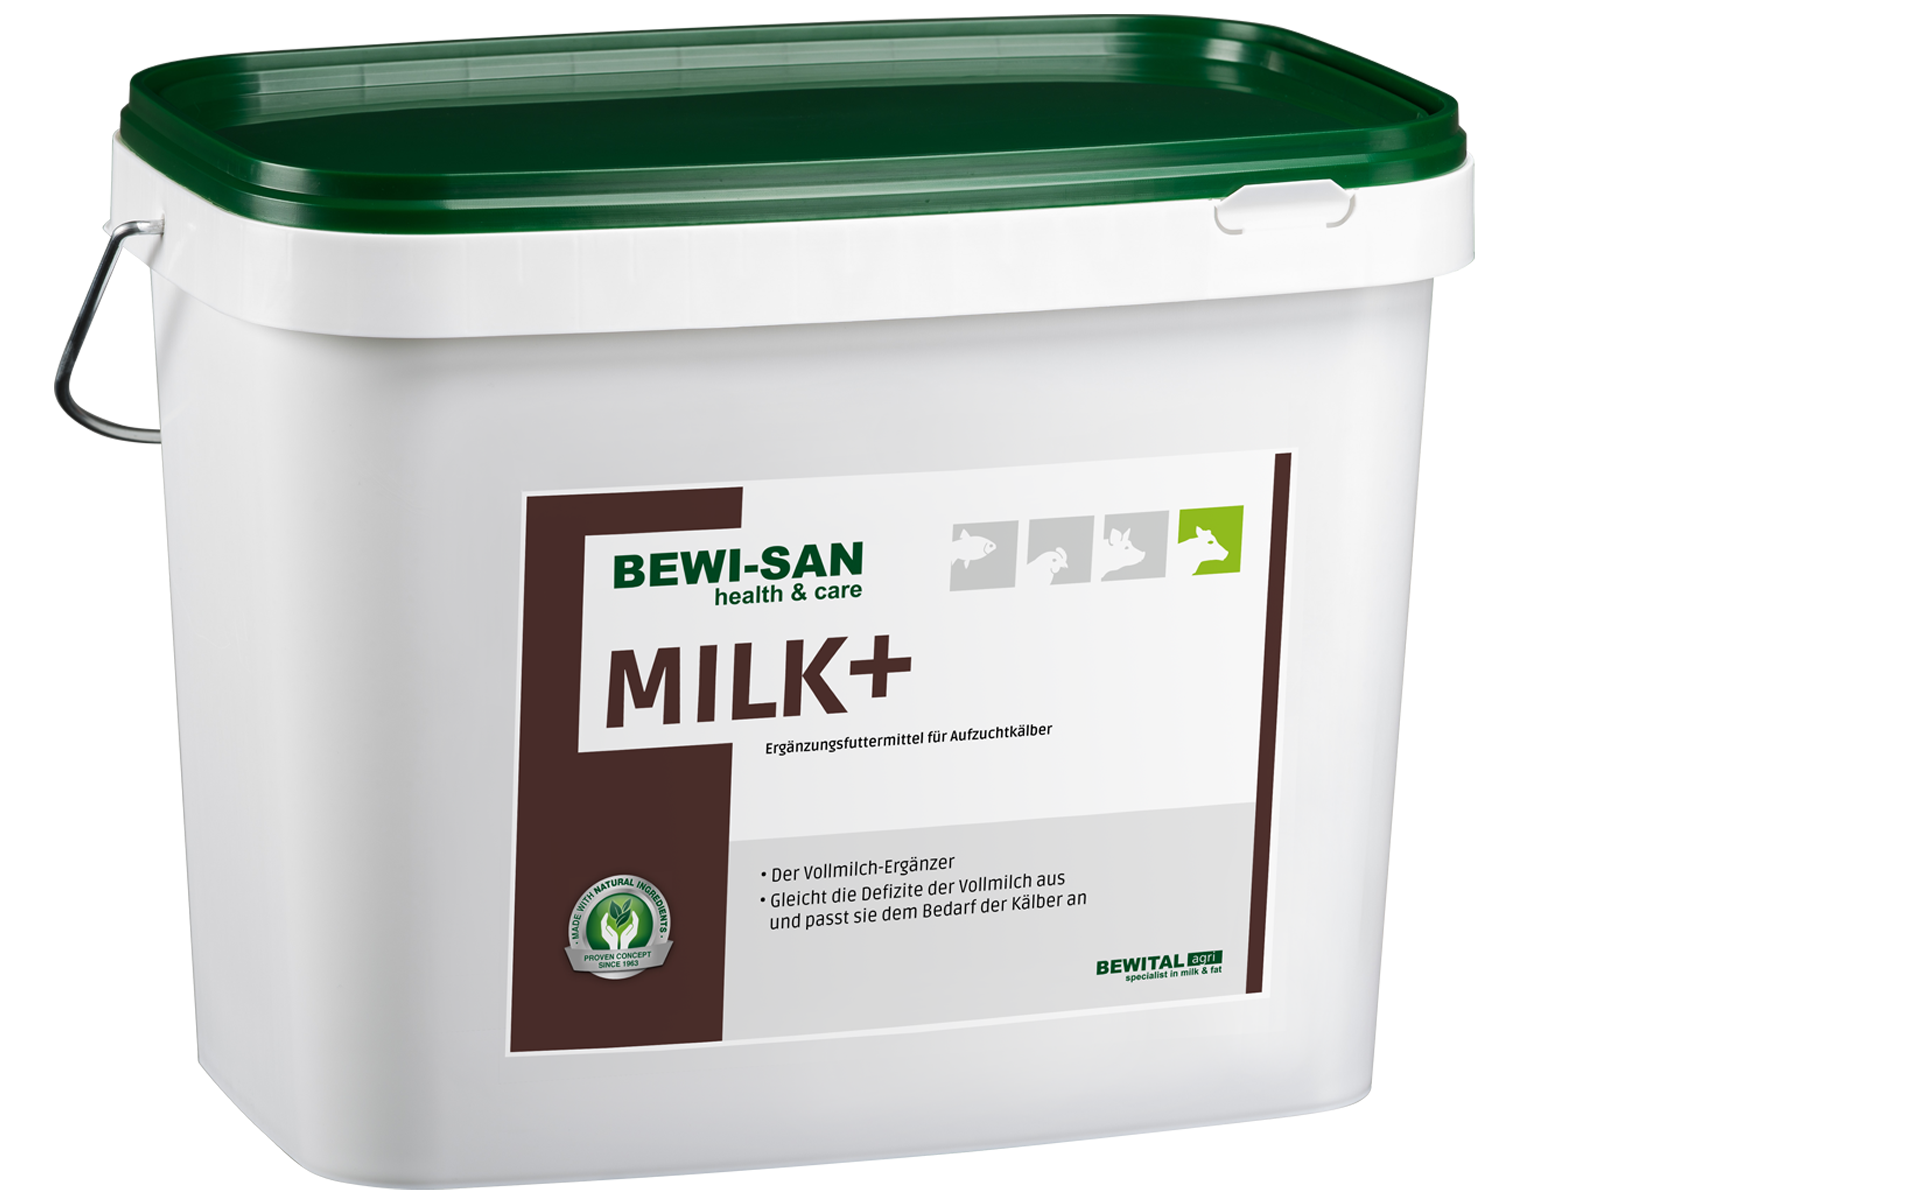 BEWI-SAN Milk+